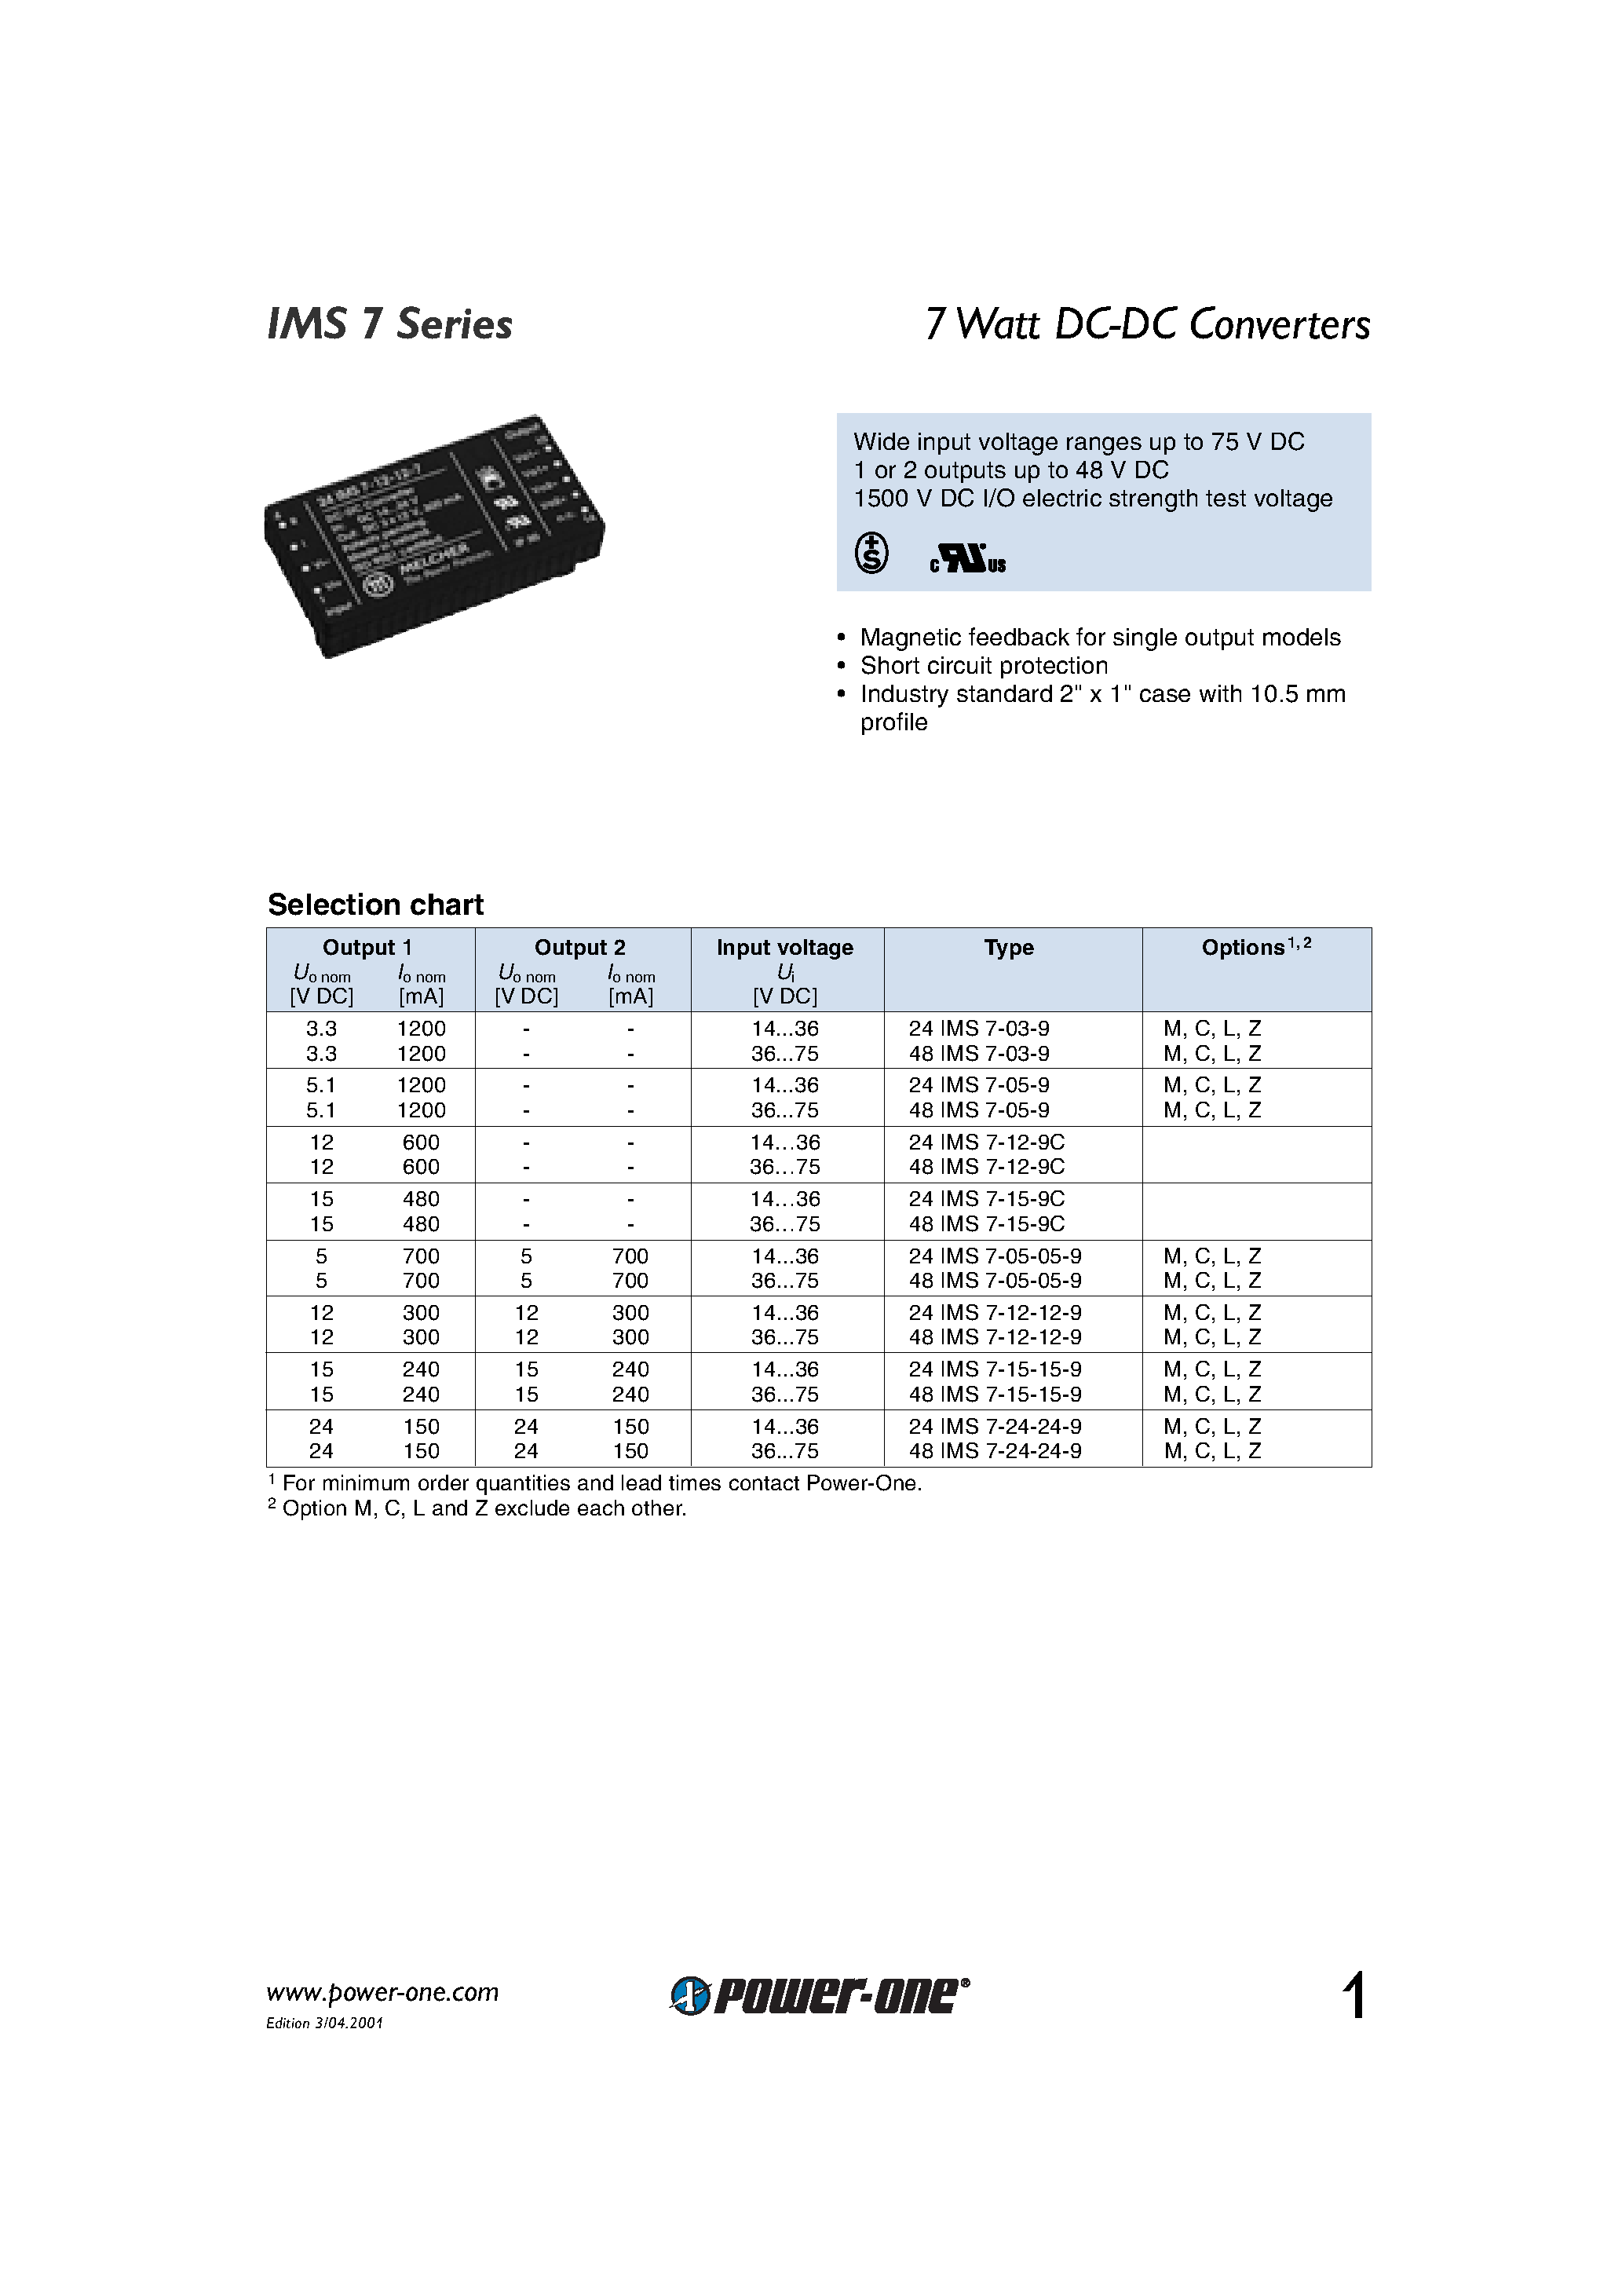 Datasheet 48IMS7-05-05-9 - 7 Watt DC-DC Converters page 1